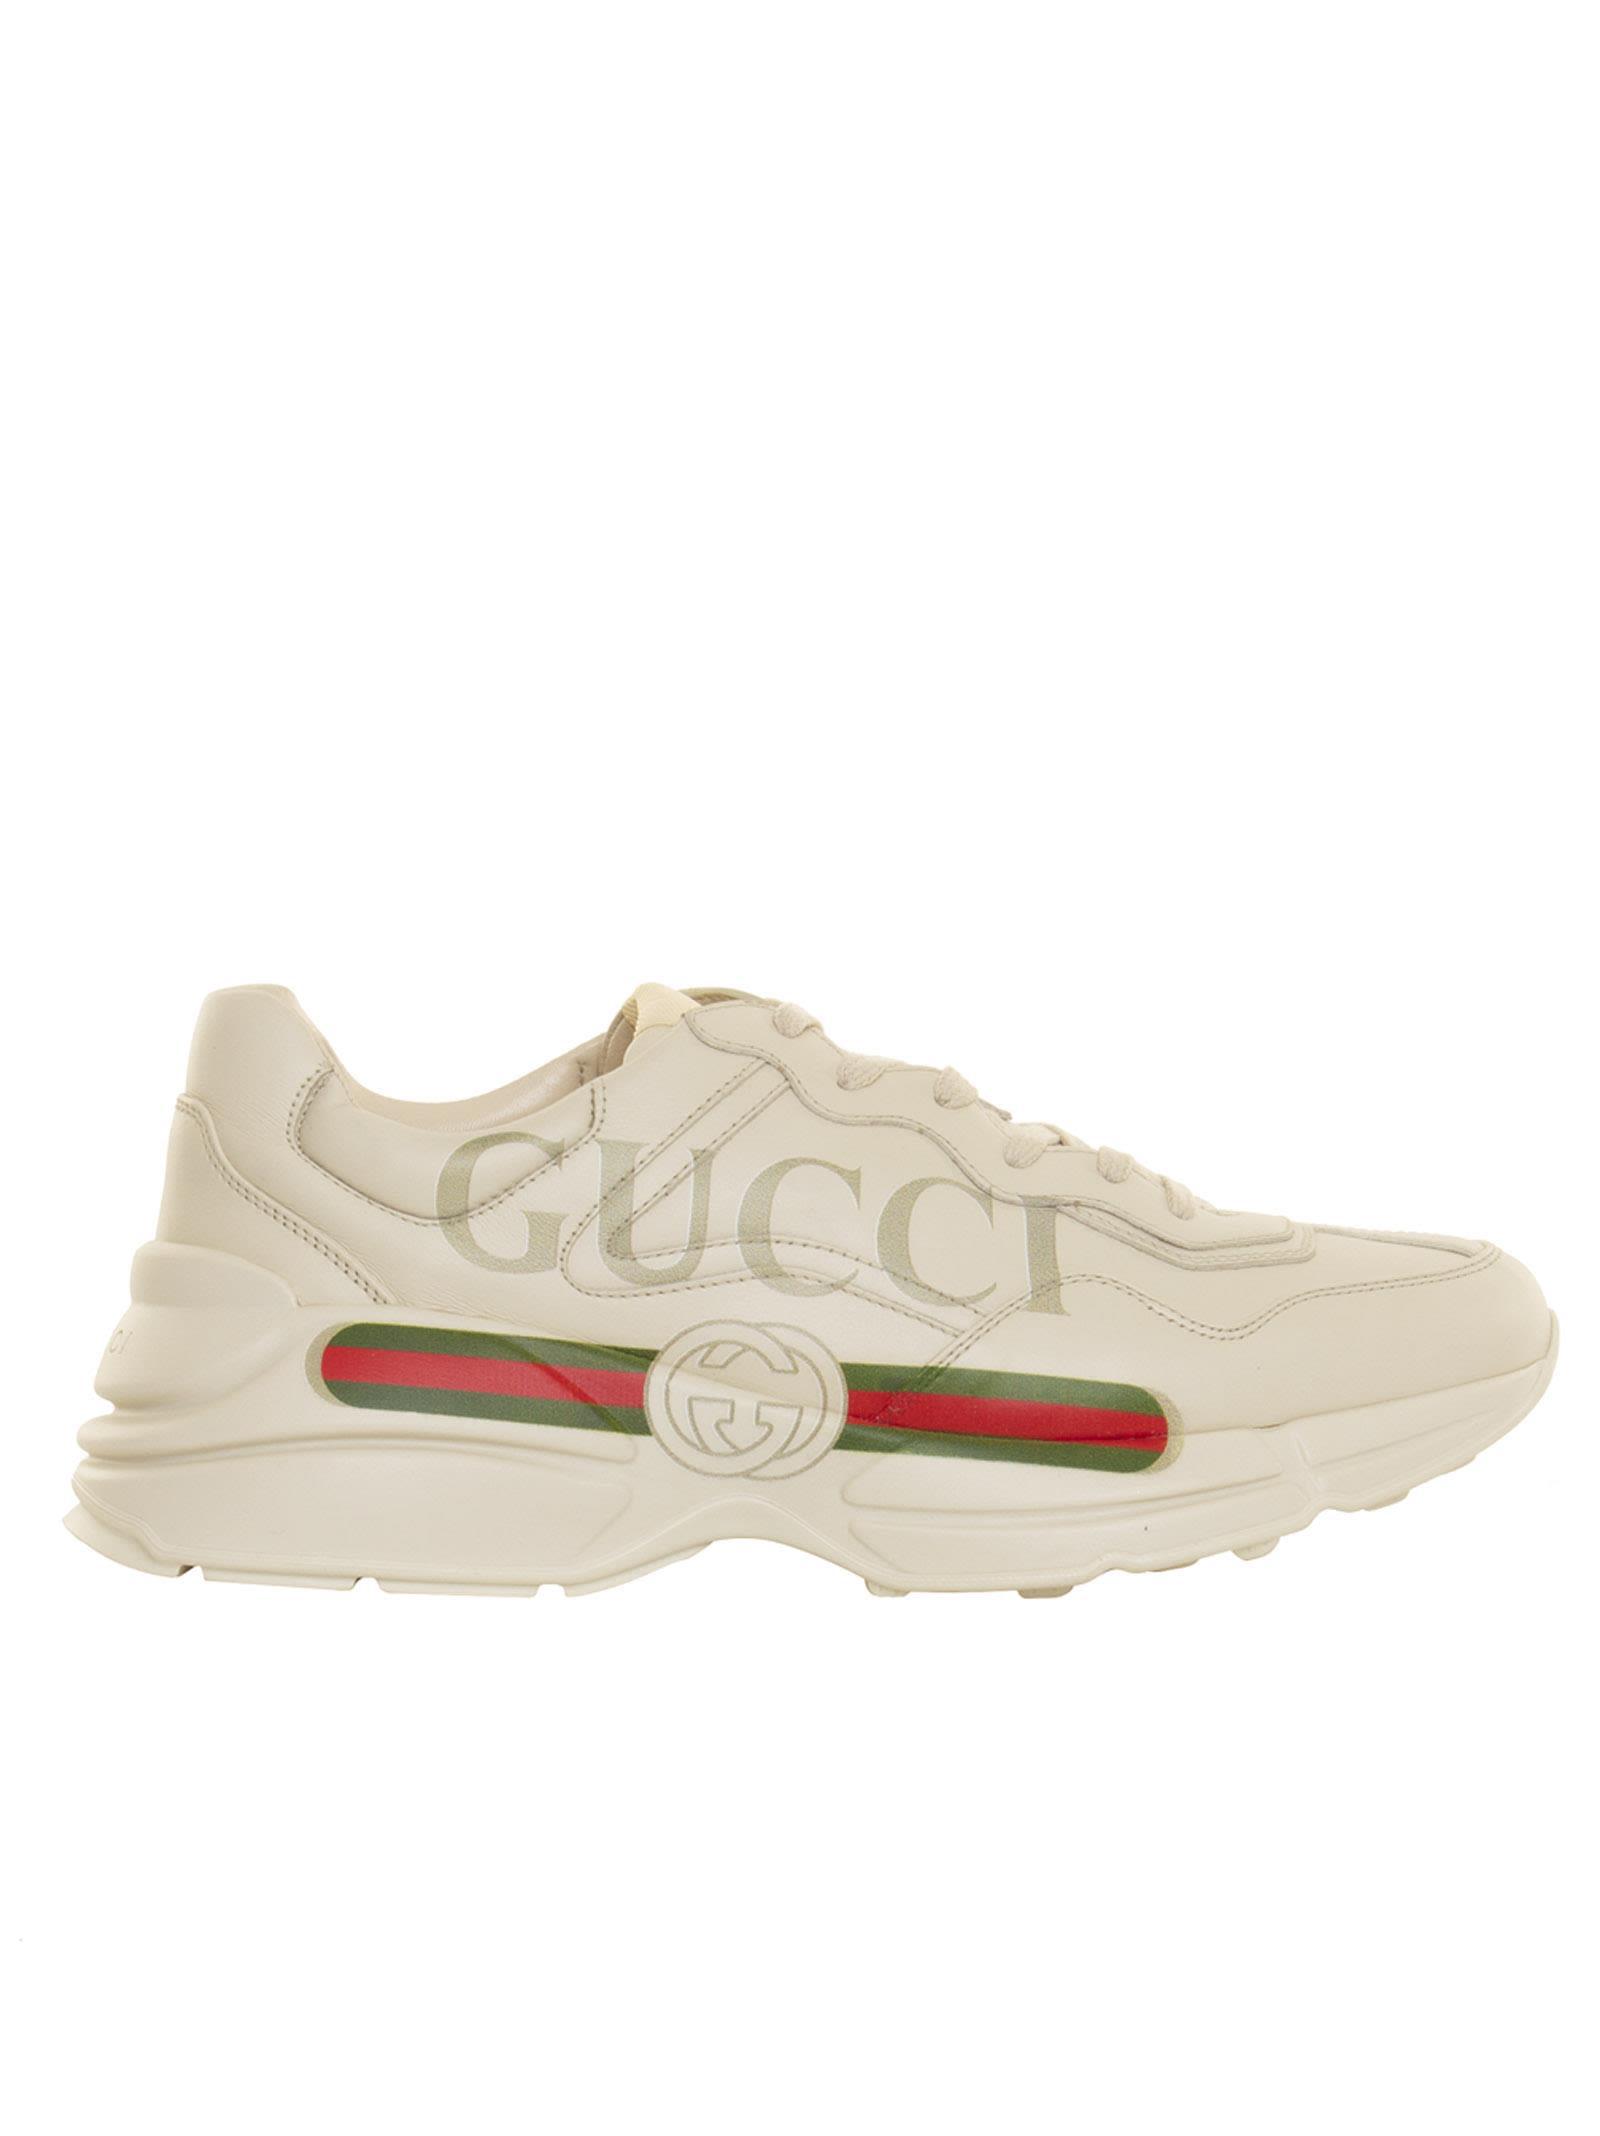 Gucci Rhyton Logo Leather Sneaker In Bianco | ModeSens